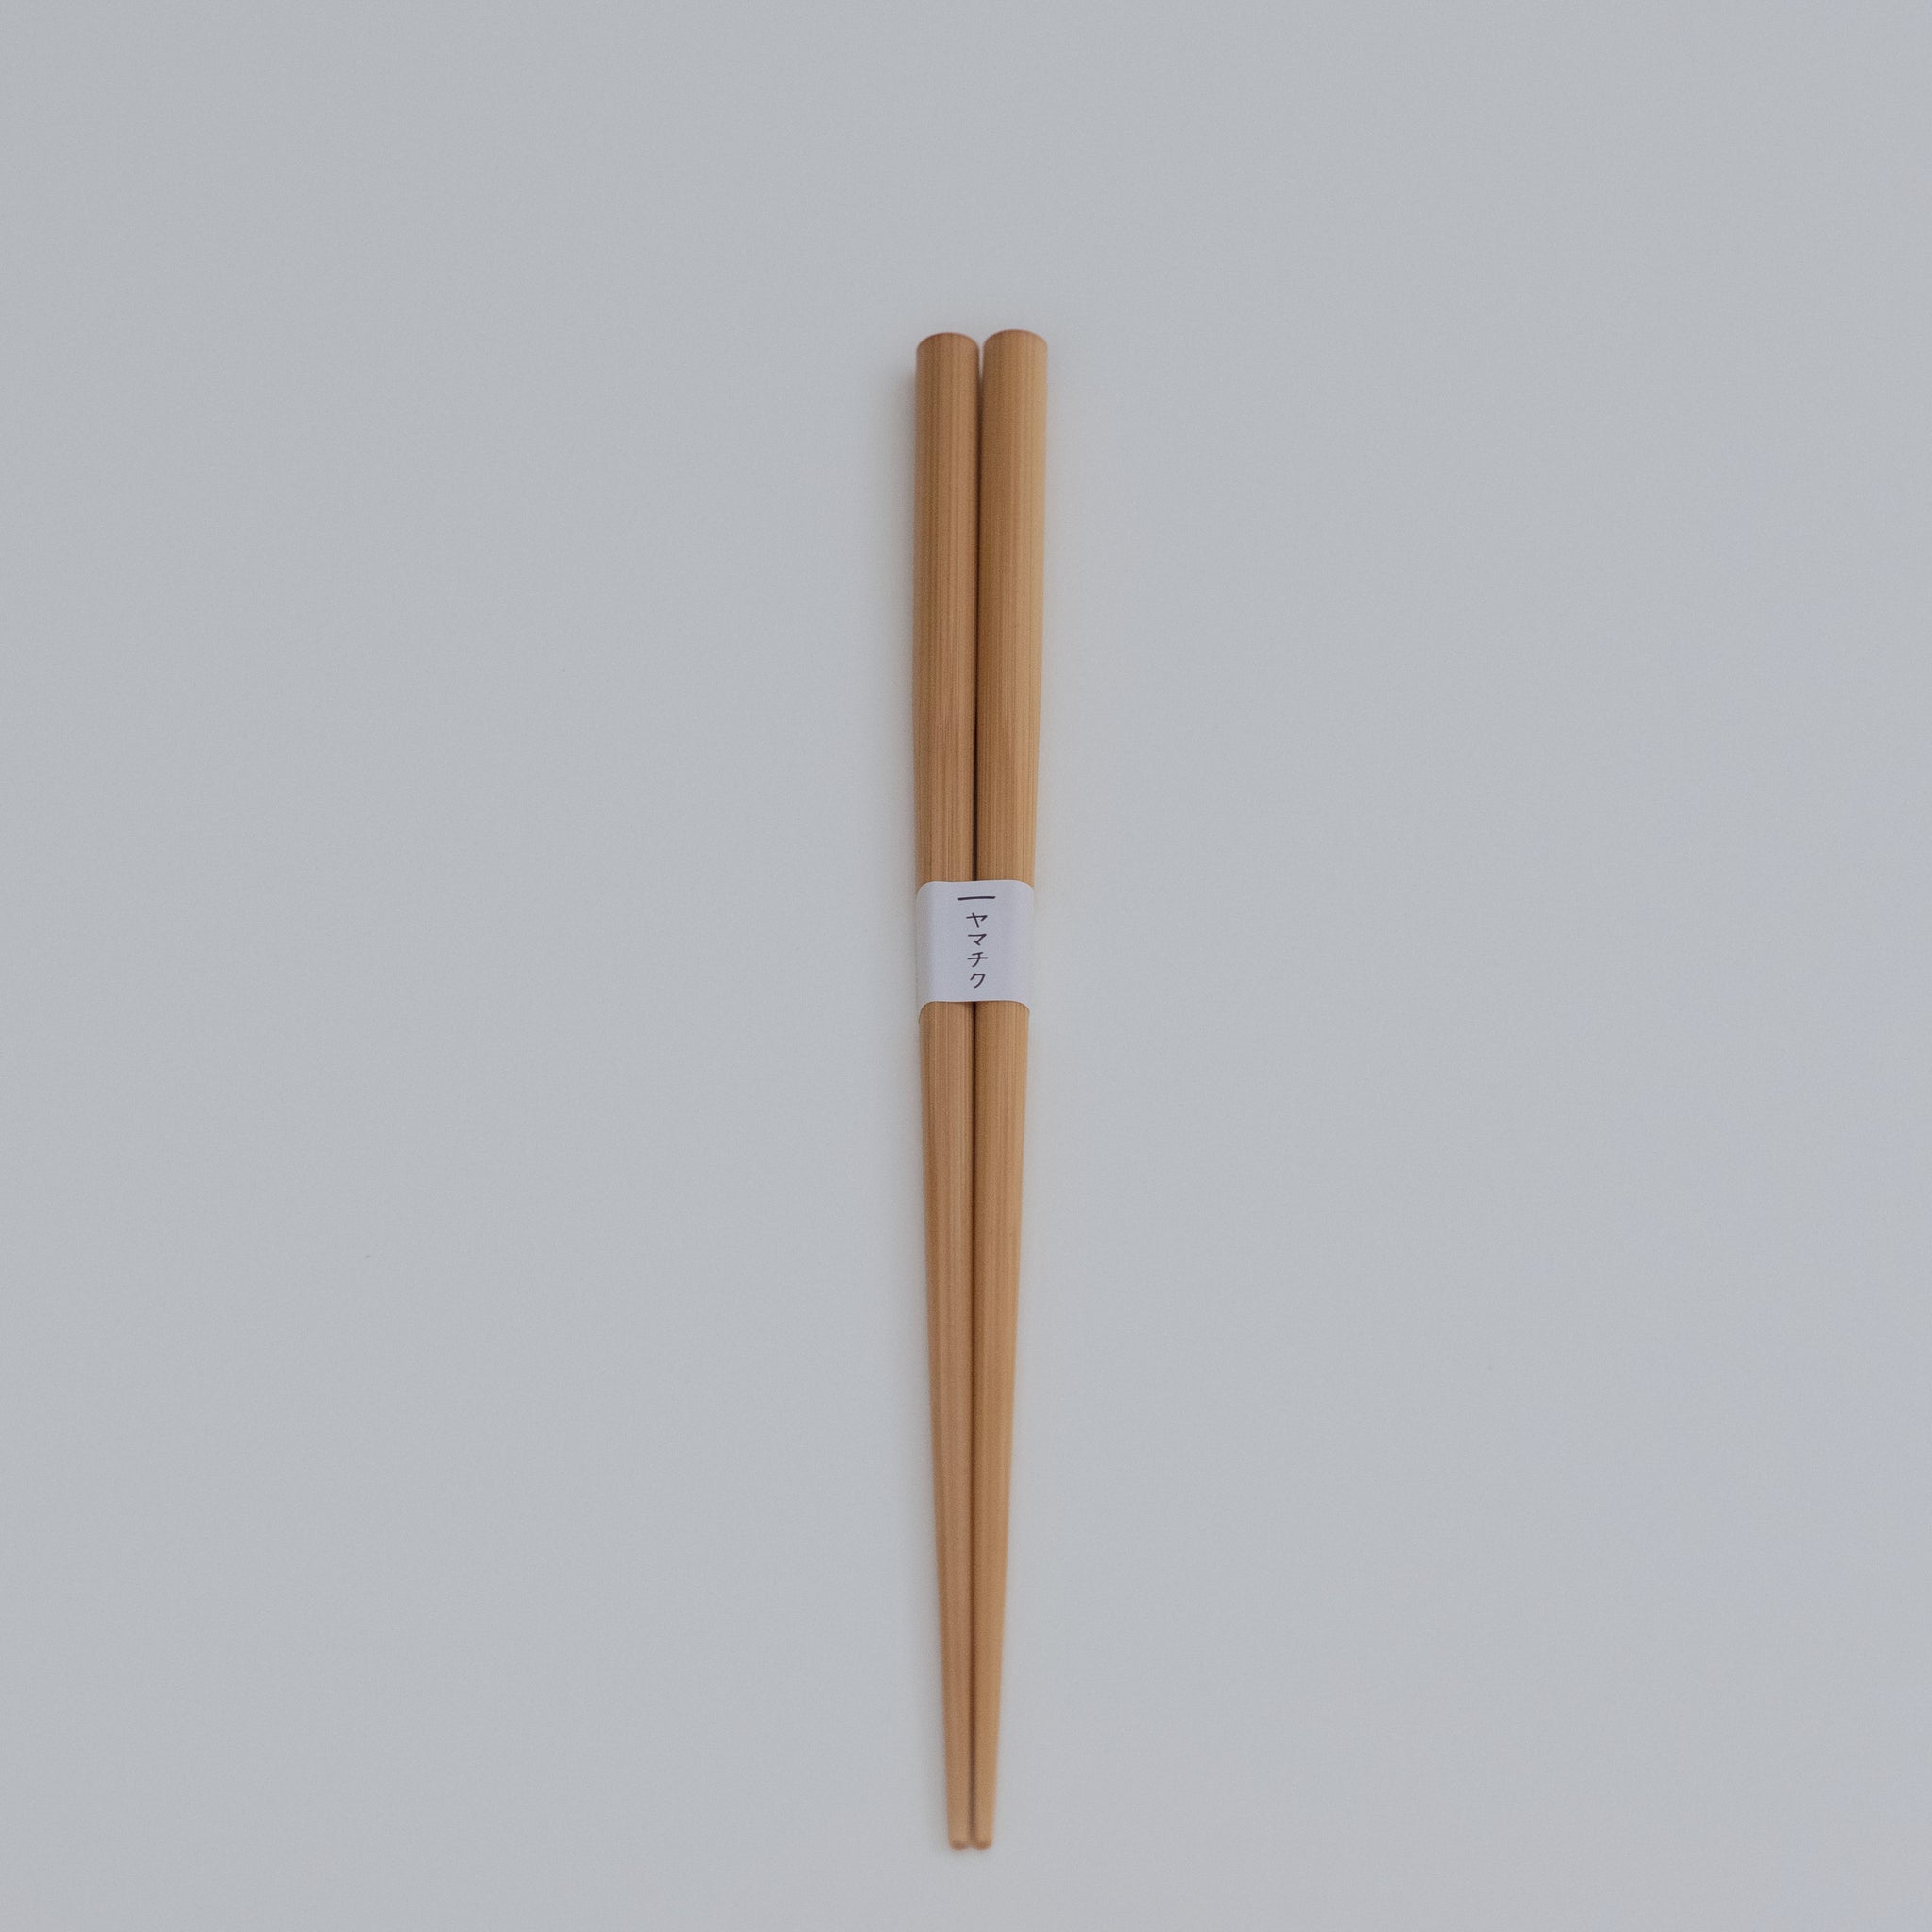 Pair of Okaeri Chopsticks